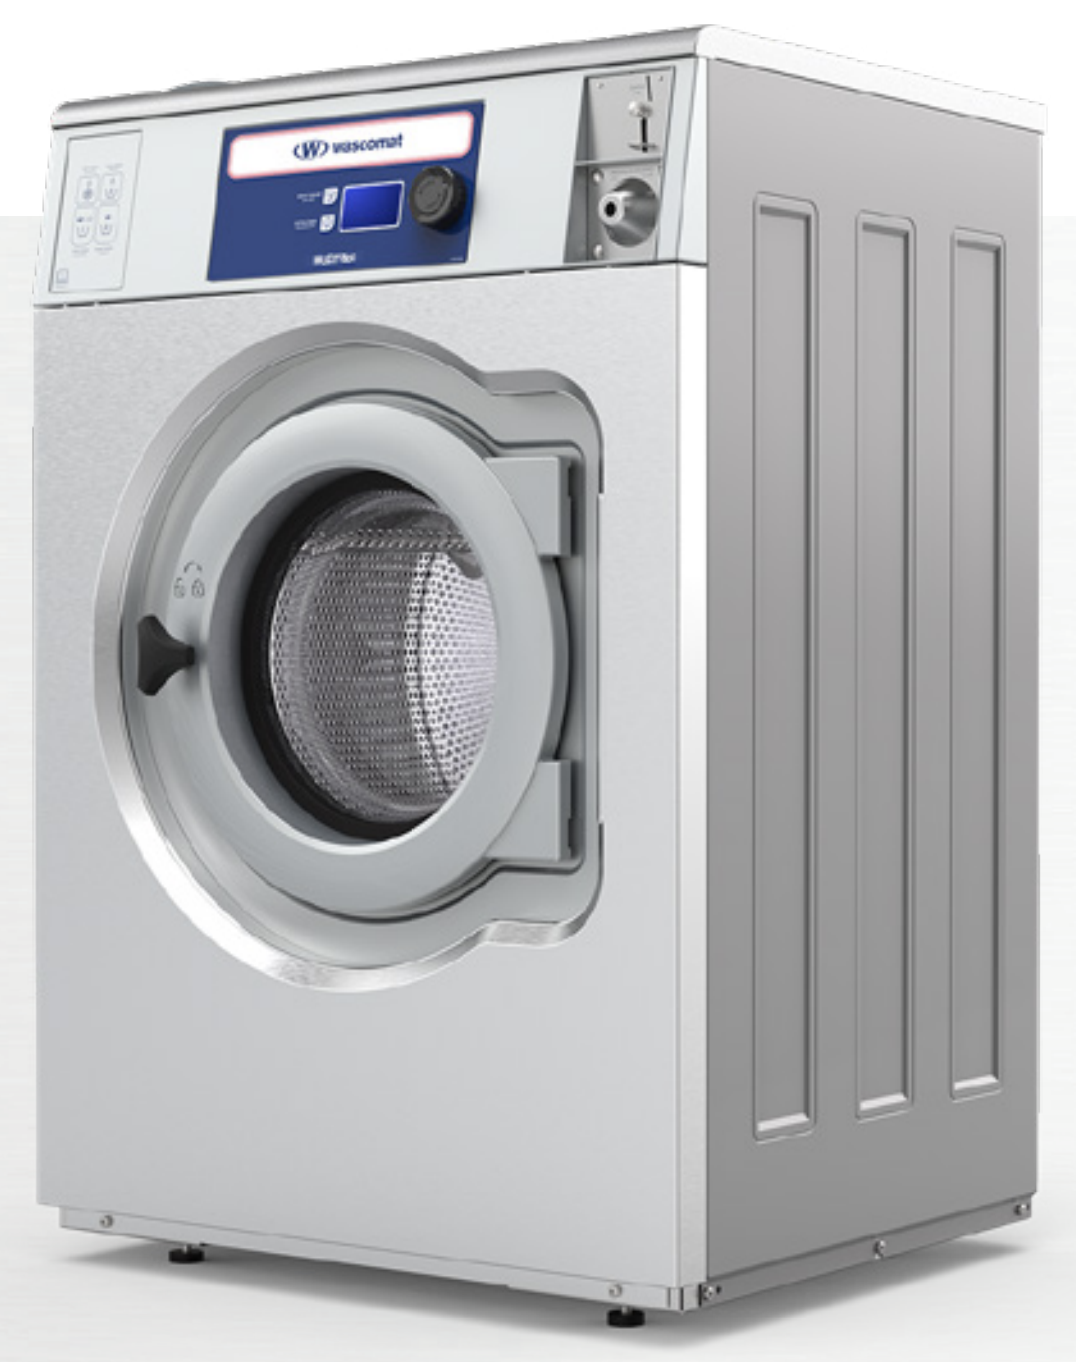 New 2022 Wascomat Wud718 - Automatic Laundry Service Of Va, Inc.